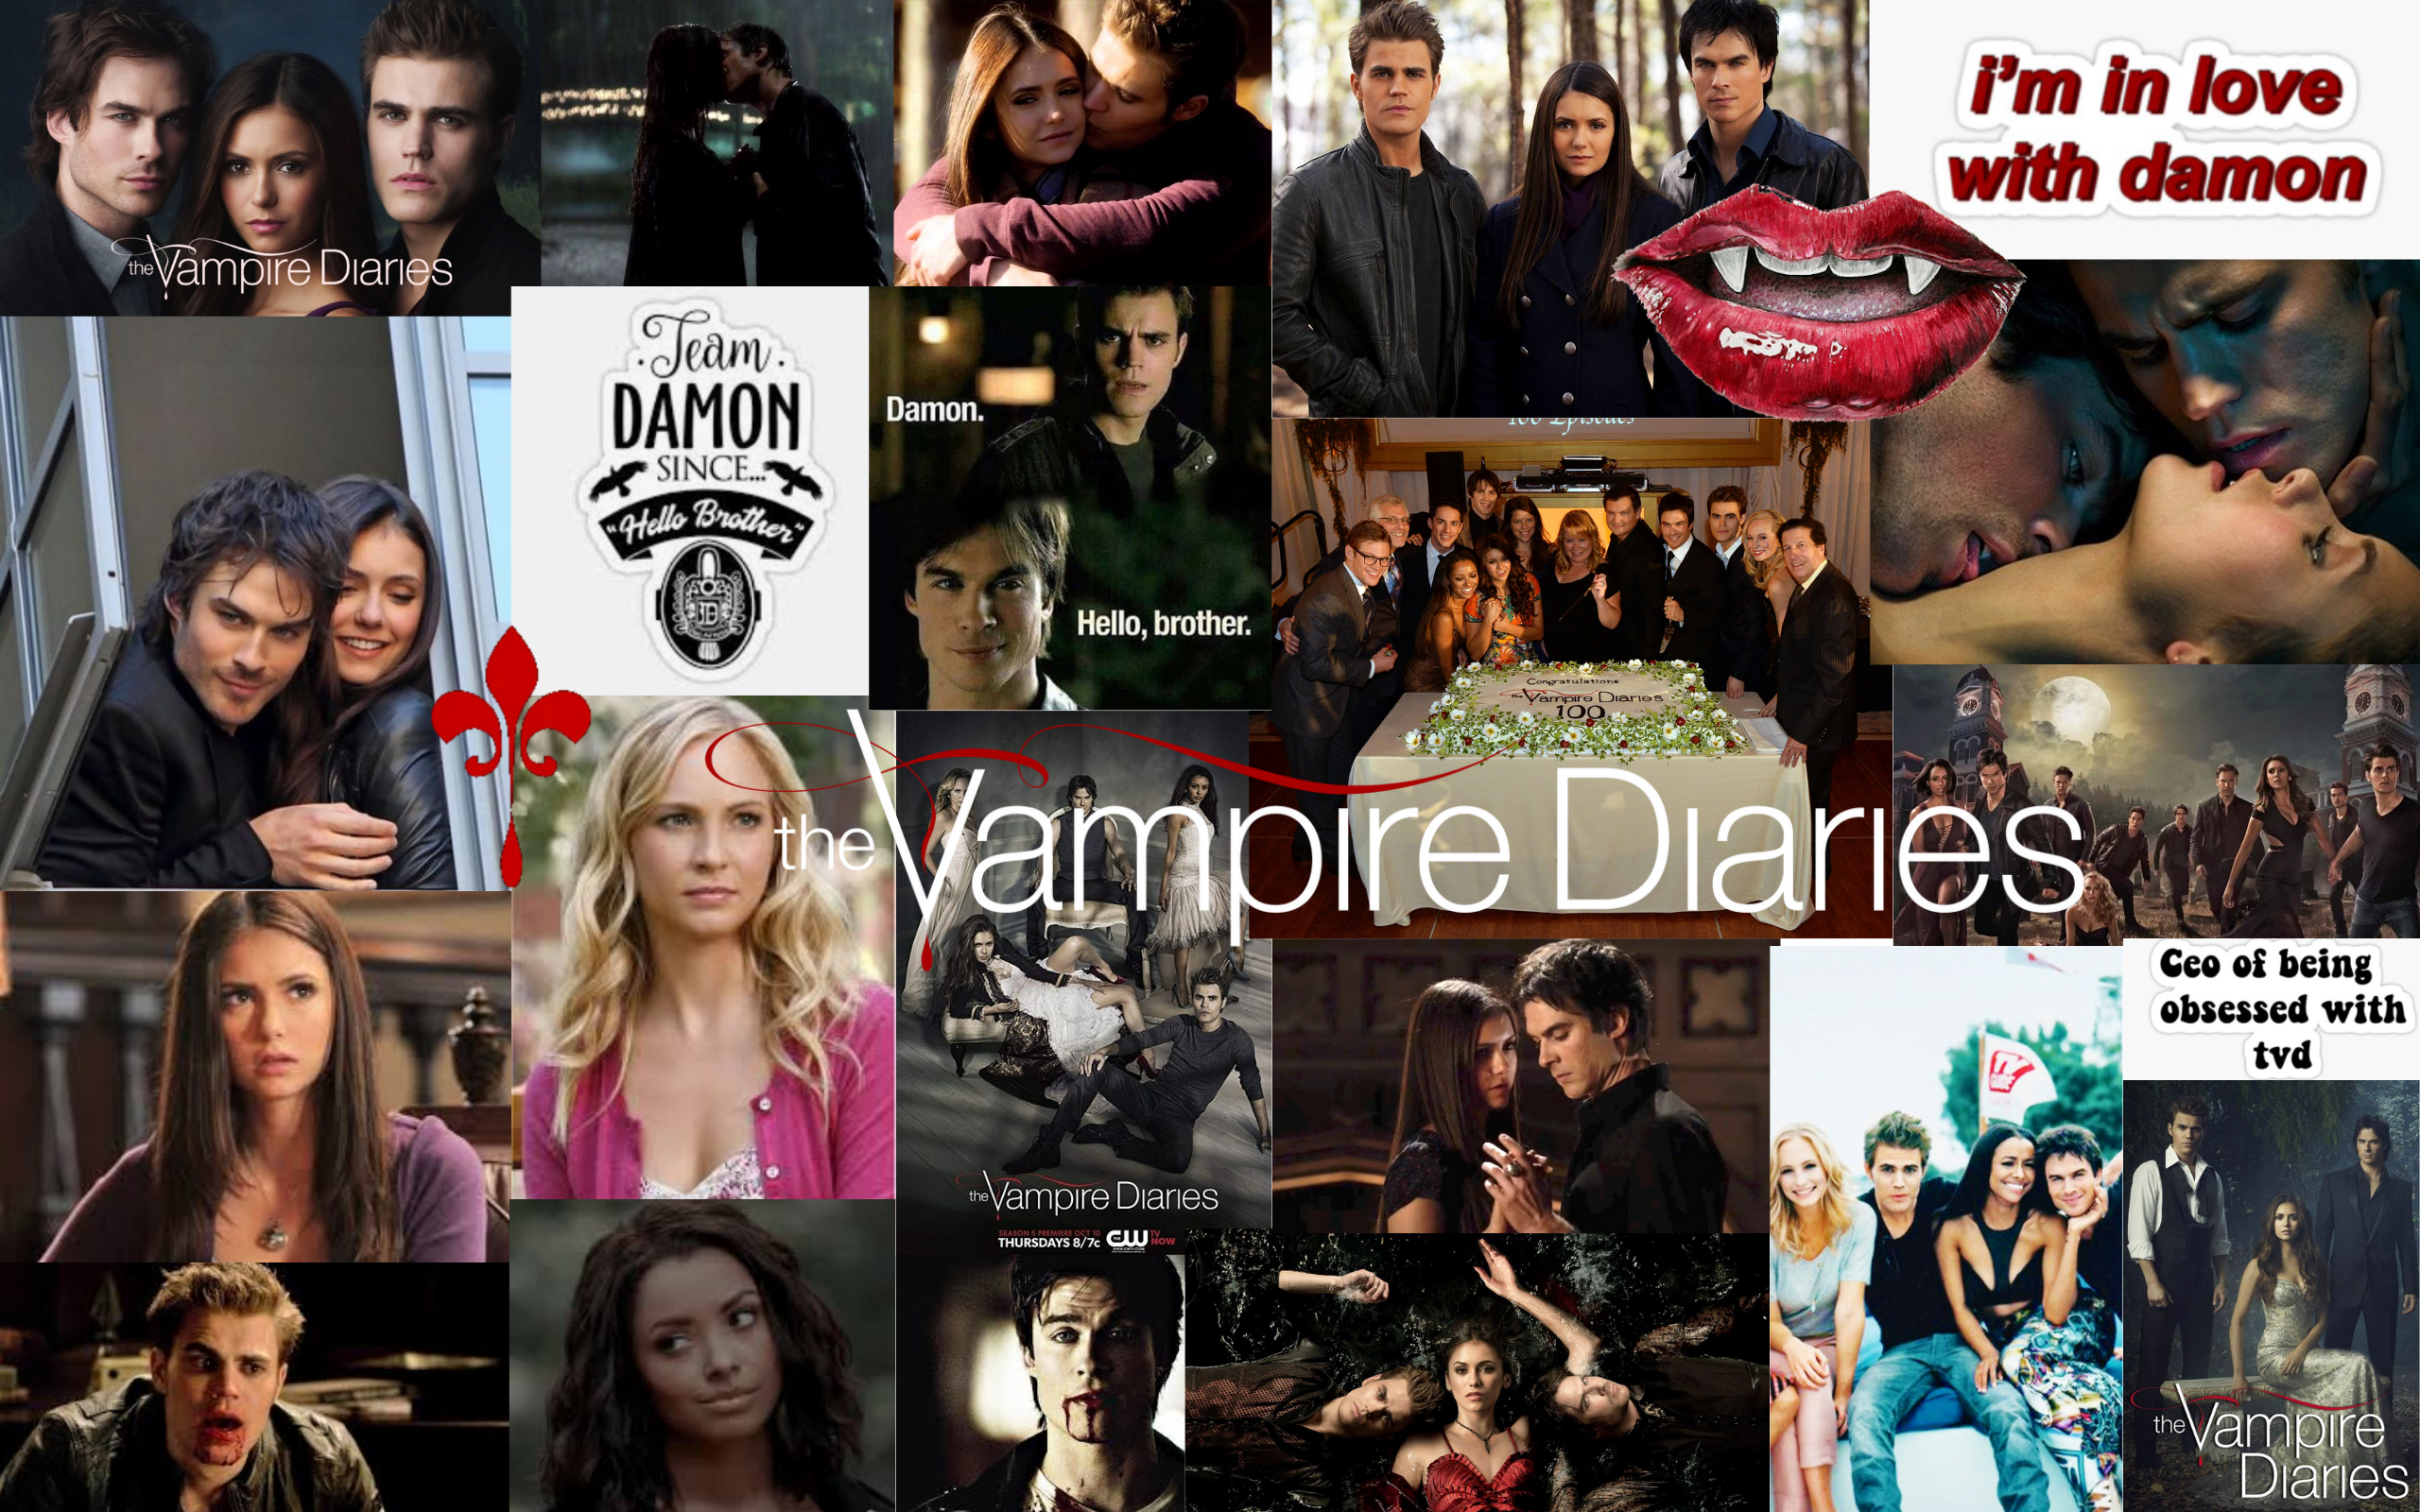 Tvd Wallpaper(laptop). Vampire diaries wallpaper, Vampire diaries poster, Vampire diaries guys